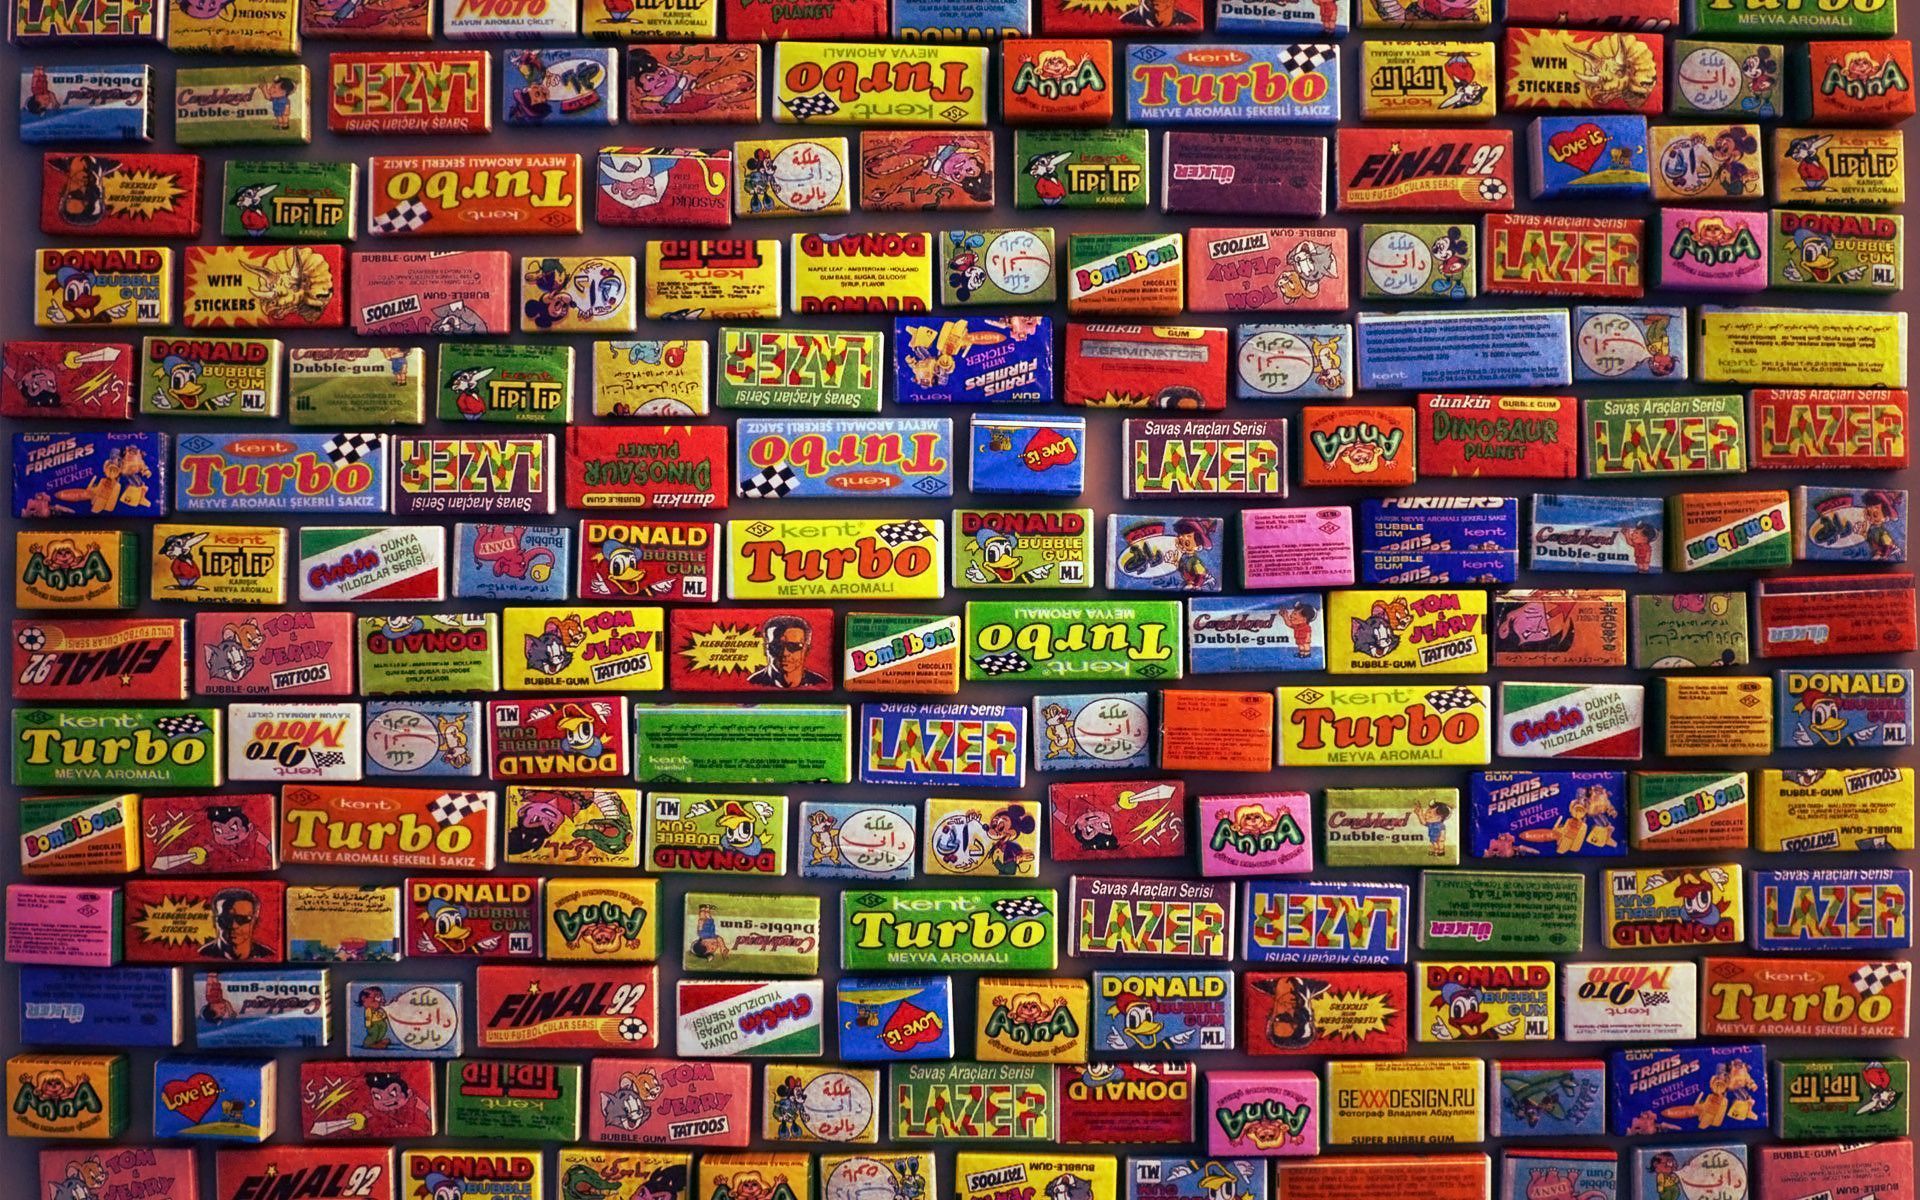 Free download HD wallpaper of gum 90s image of love is donald ImageBankbiz [1920x1200] for your Desktop, Mobile & Tablet. Explore 90'S WallpaperS Desktop Wallpaper, 90'S Wallpaper Patterns